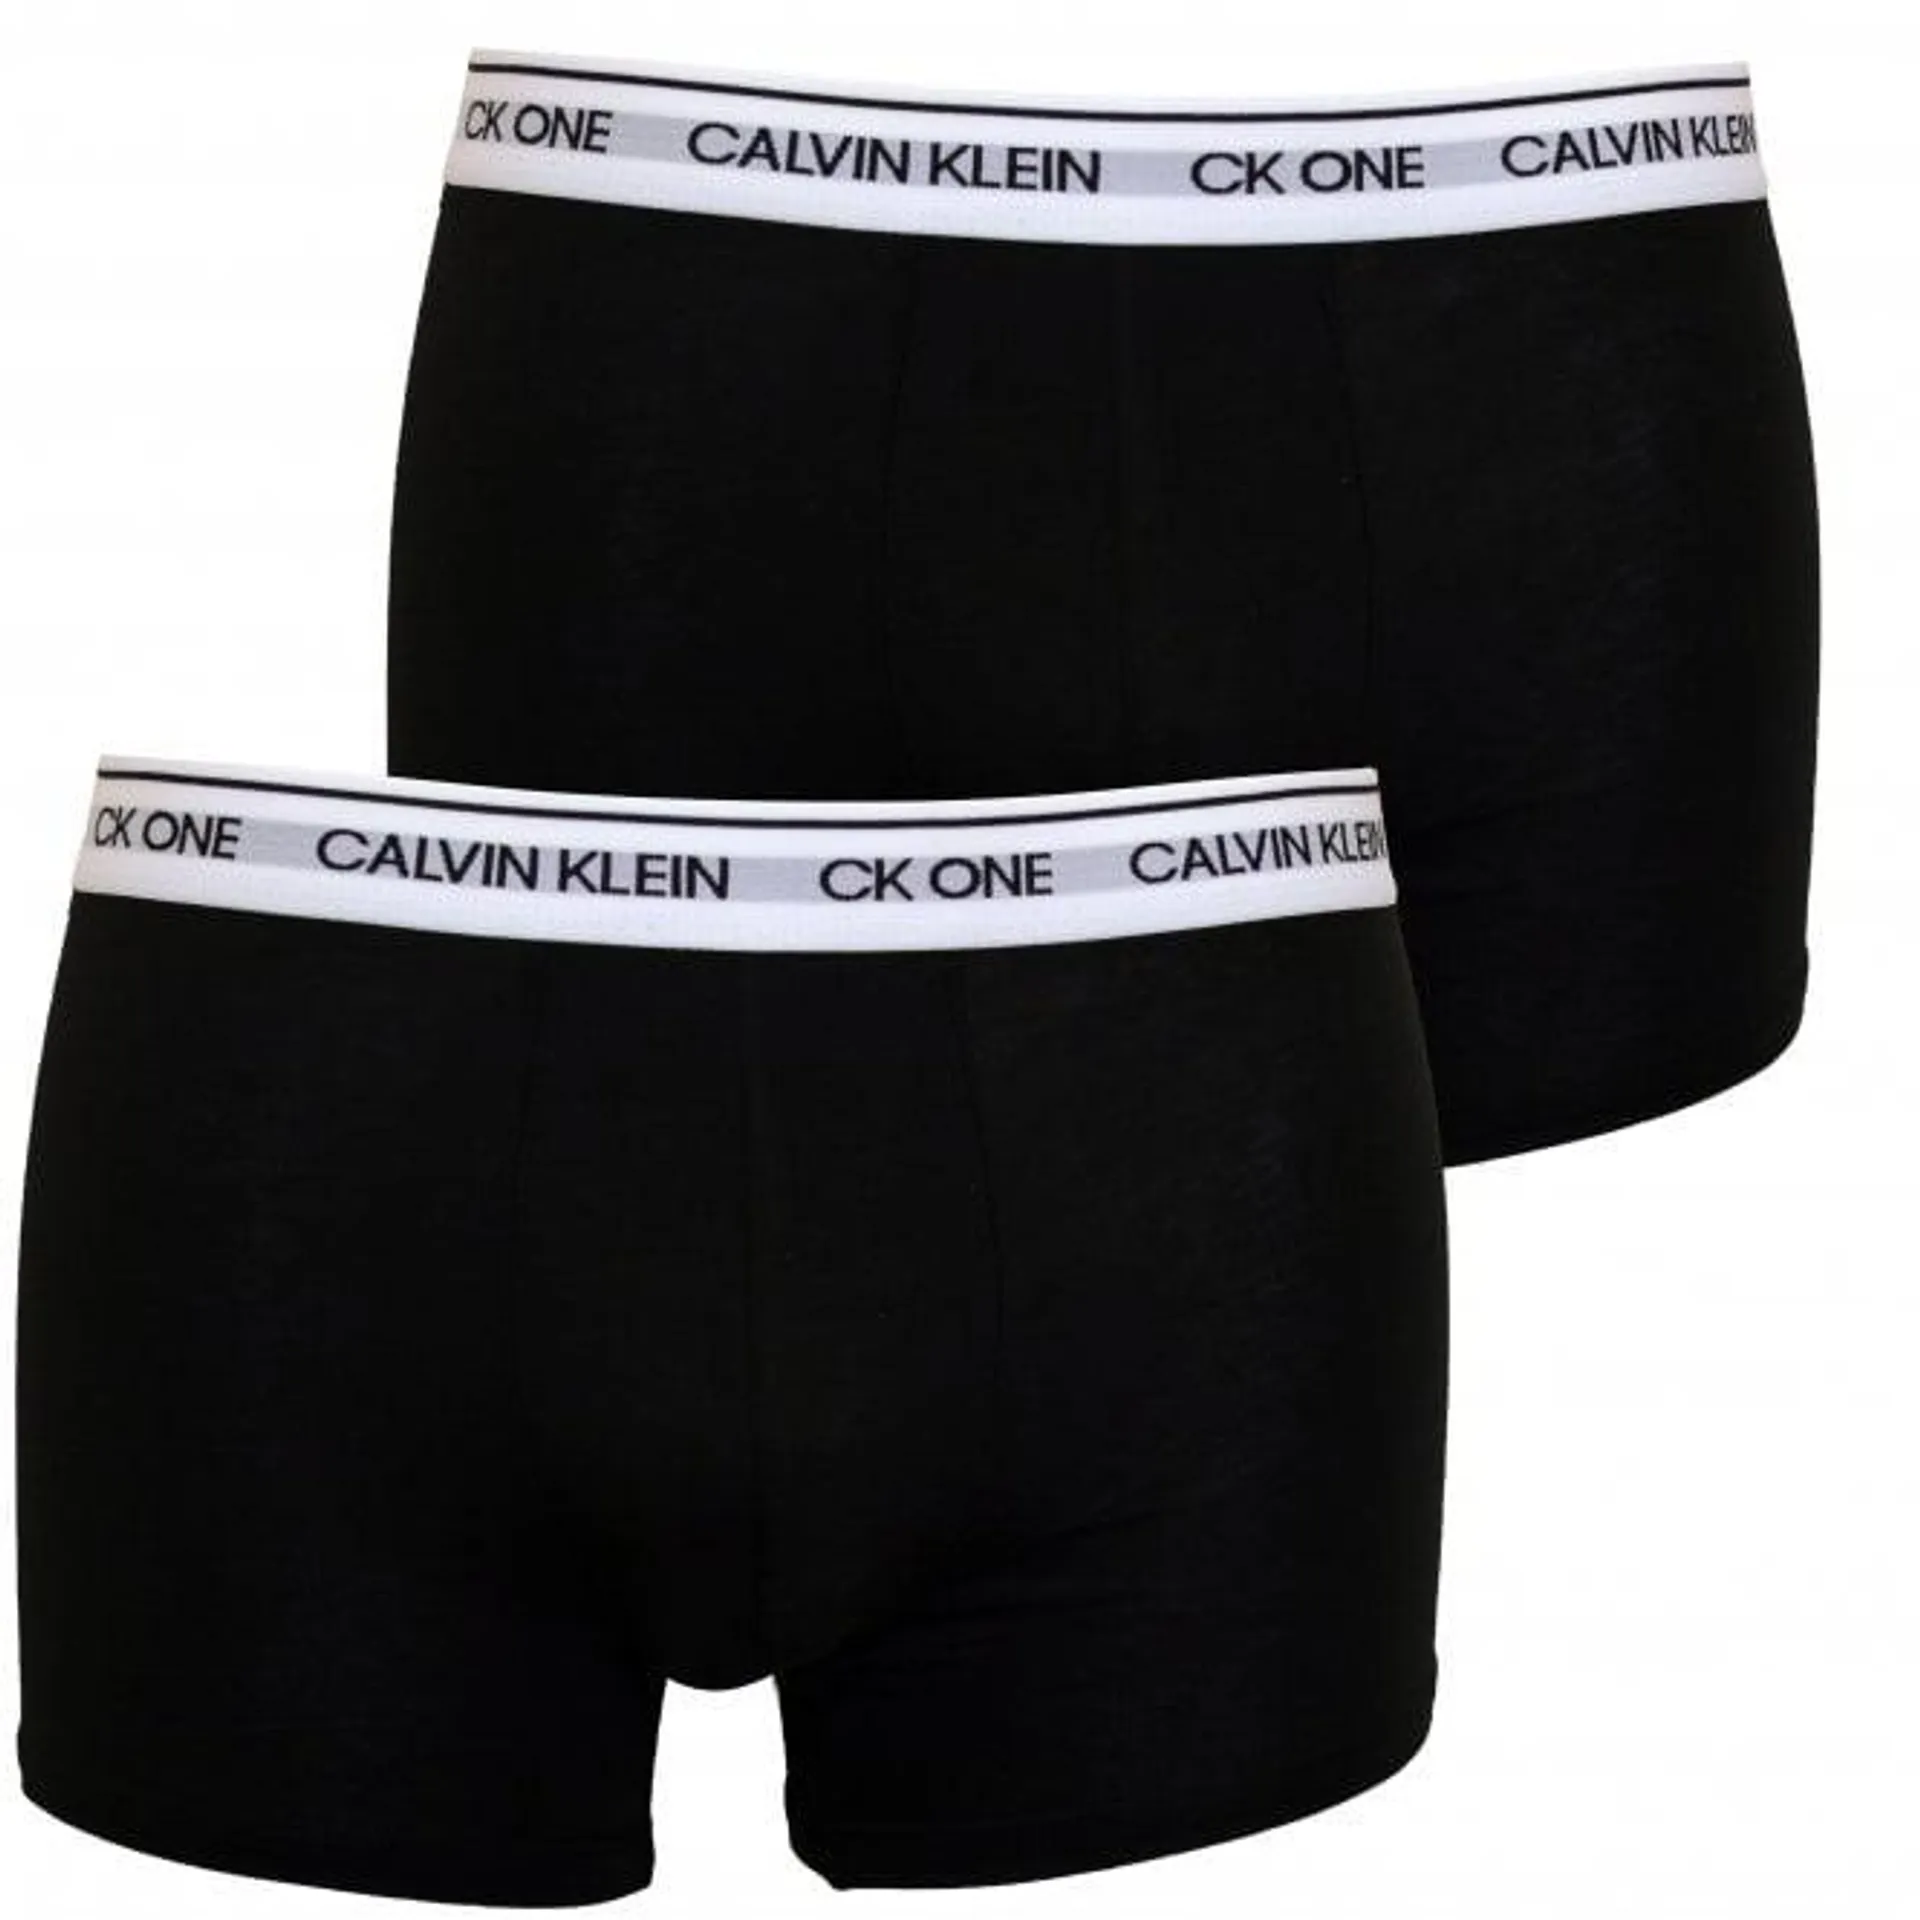 Calvin Klein 2-Pack CK One Cotton Stretch Boxer Trunks, Black